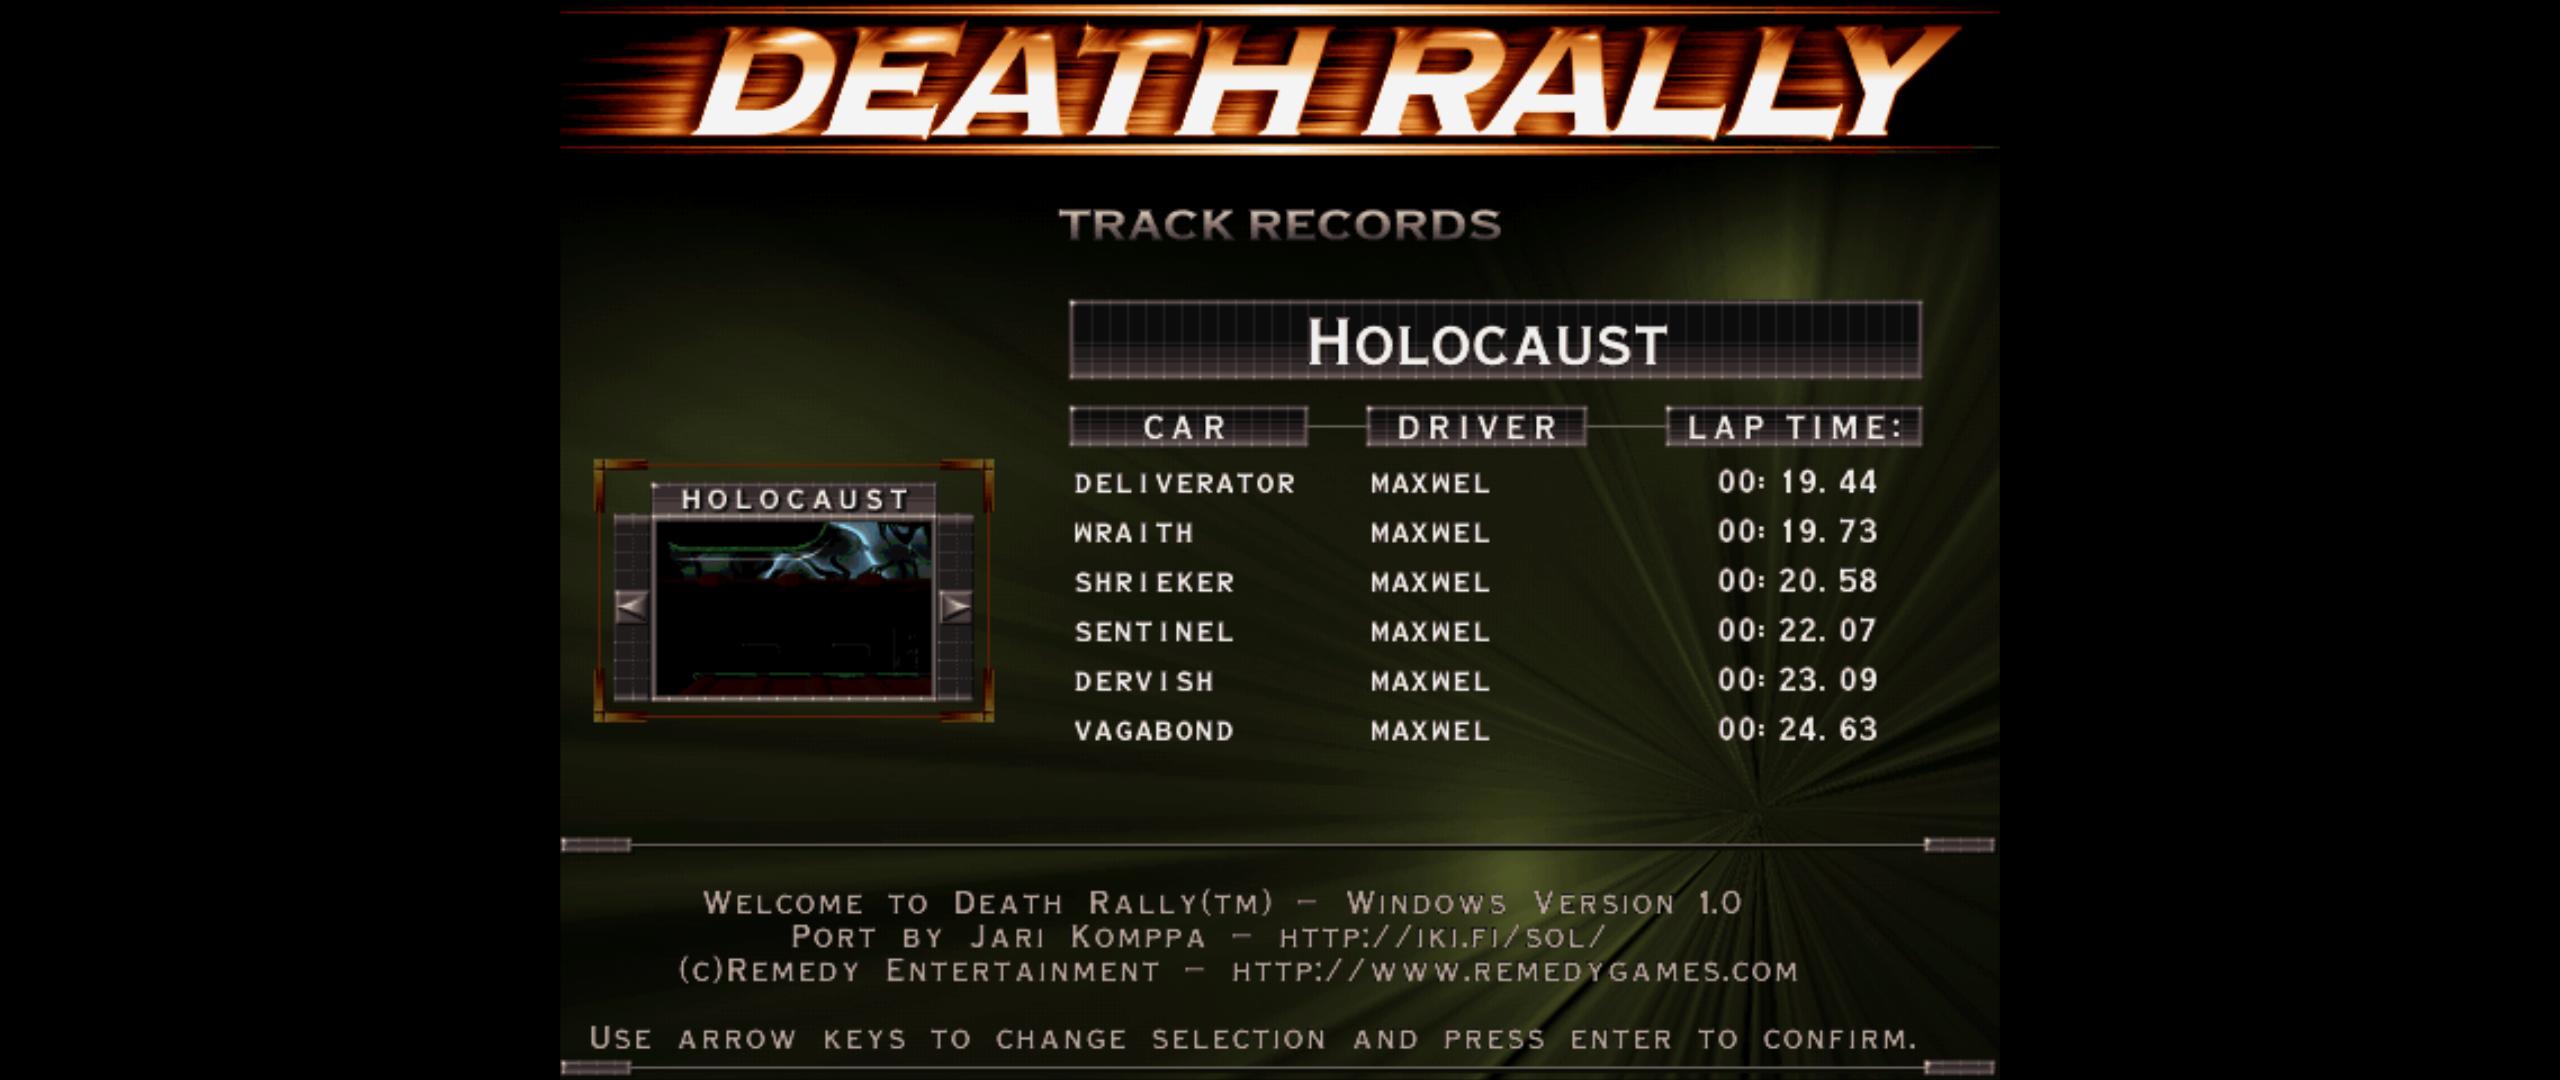 Maxwel: Death Rally [Holocaust, Dervish Car] (PC) 0:00:23.09 points on 2016-03-02 03:17:20